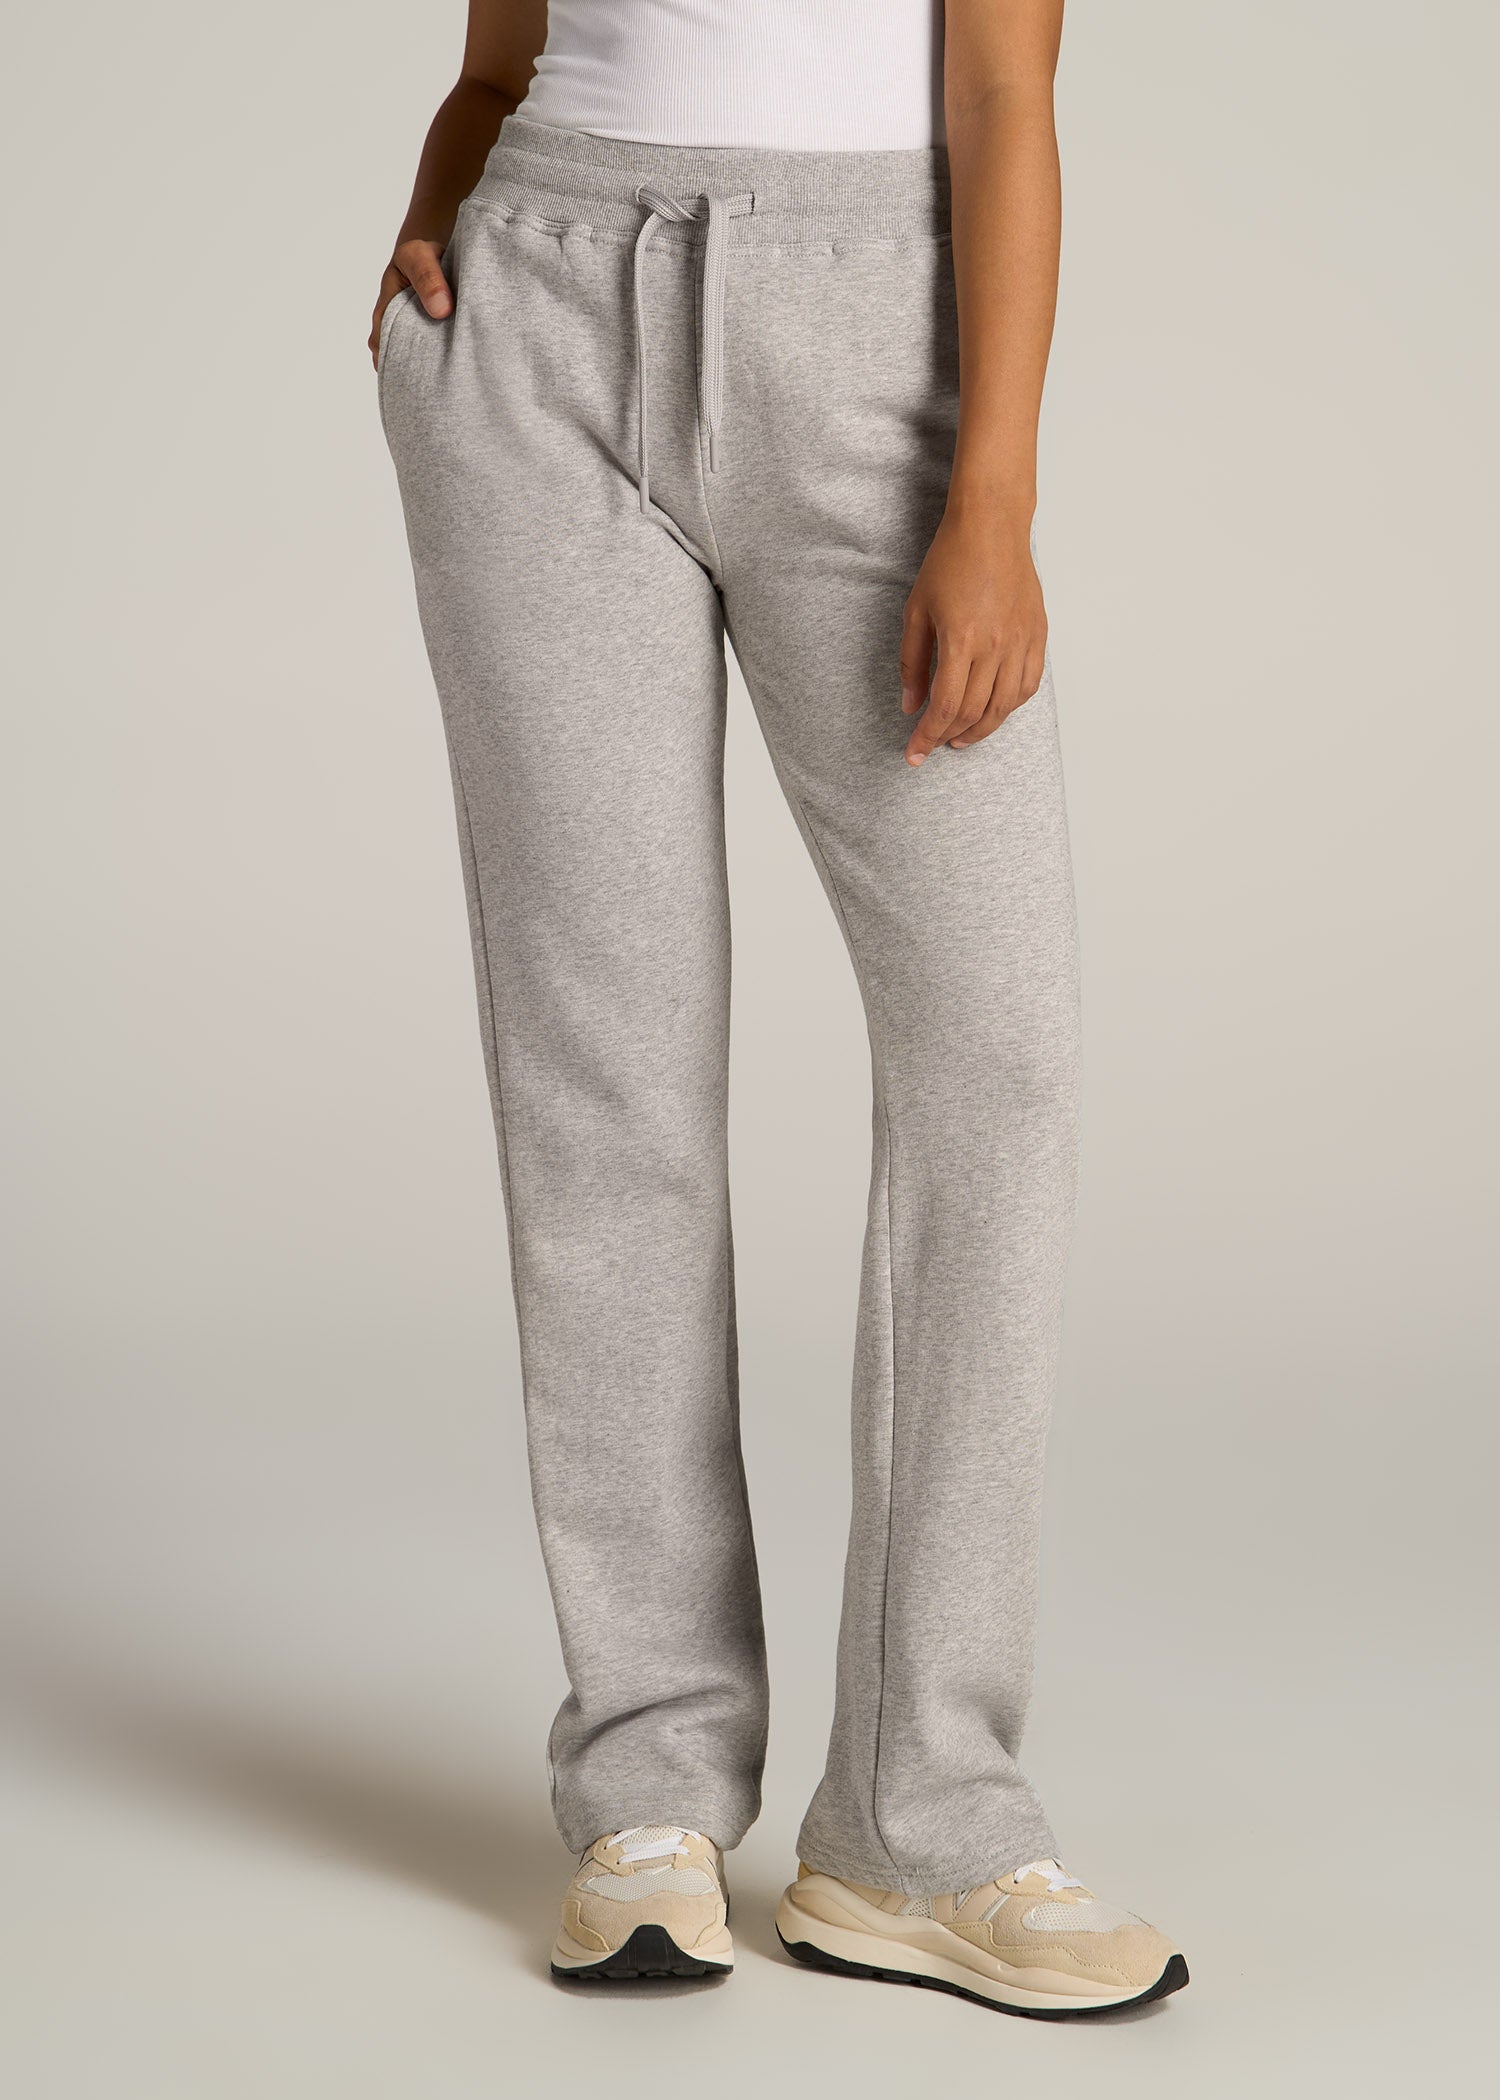 Grey Sweatpants Thin Summer Casual Wide Leg Long Pants for Girls